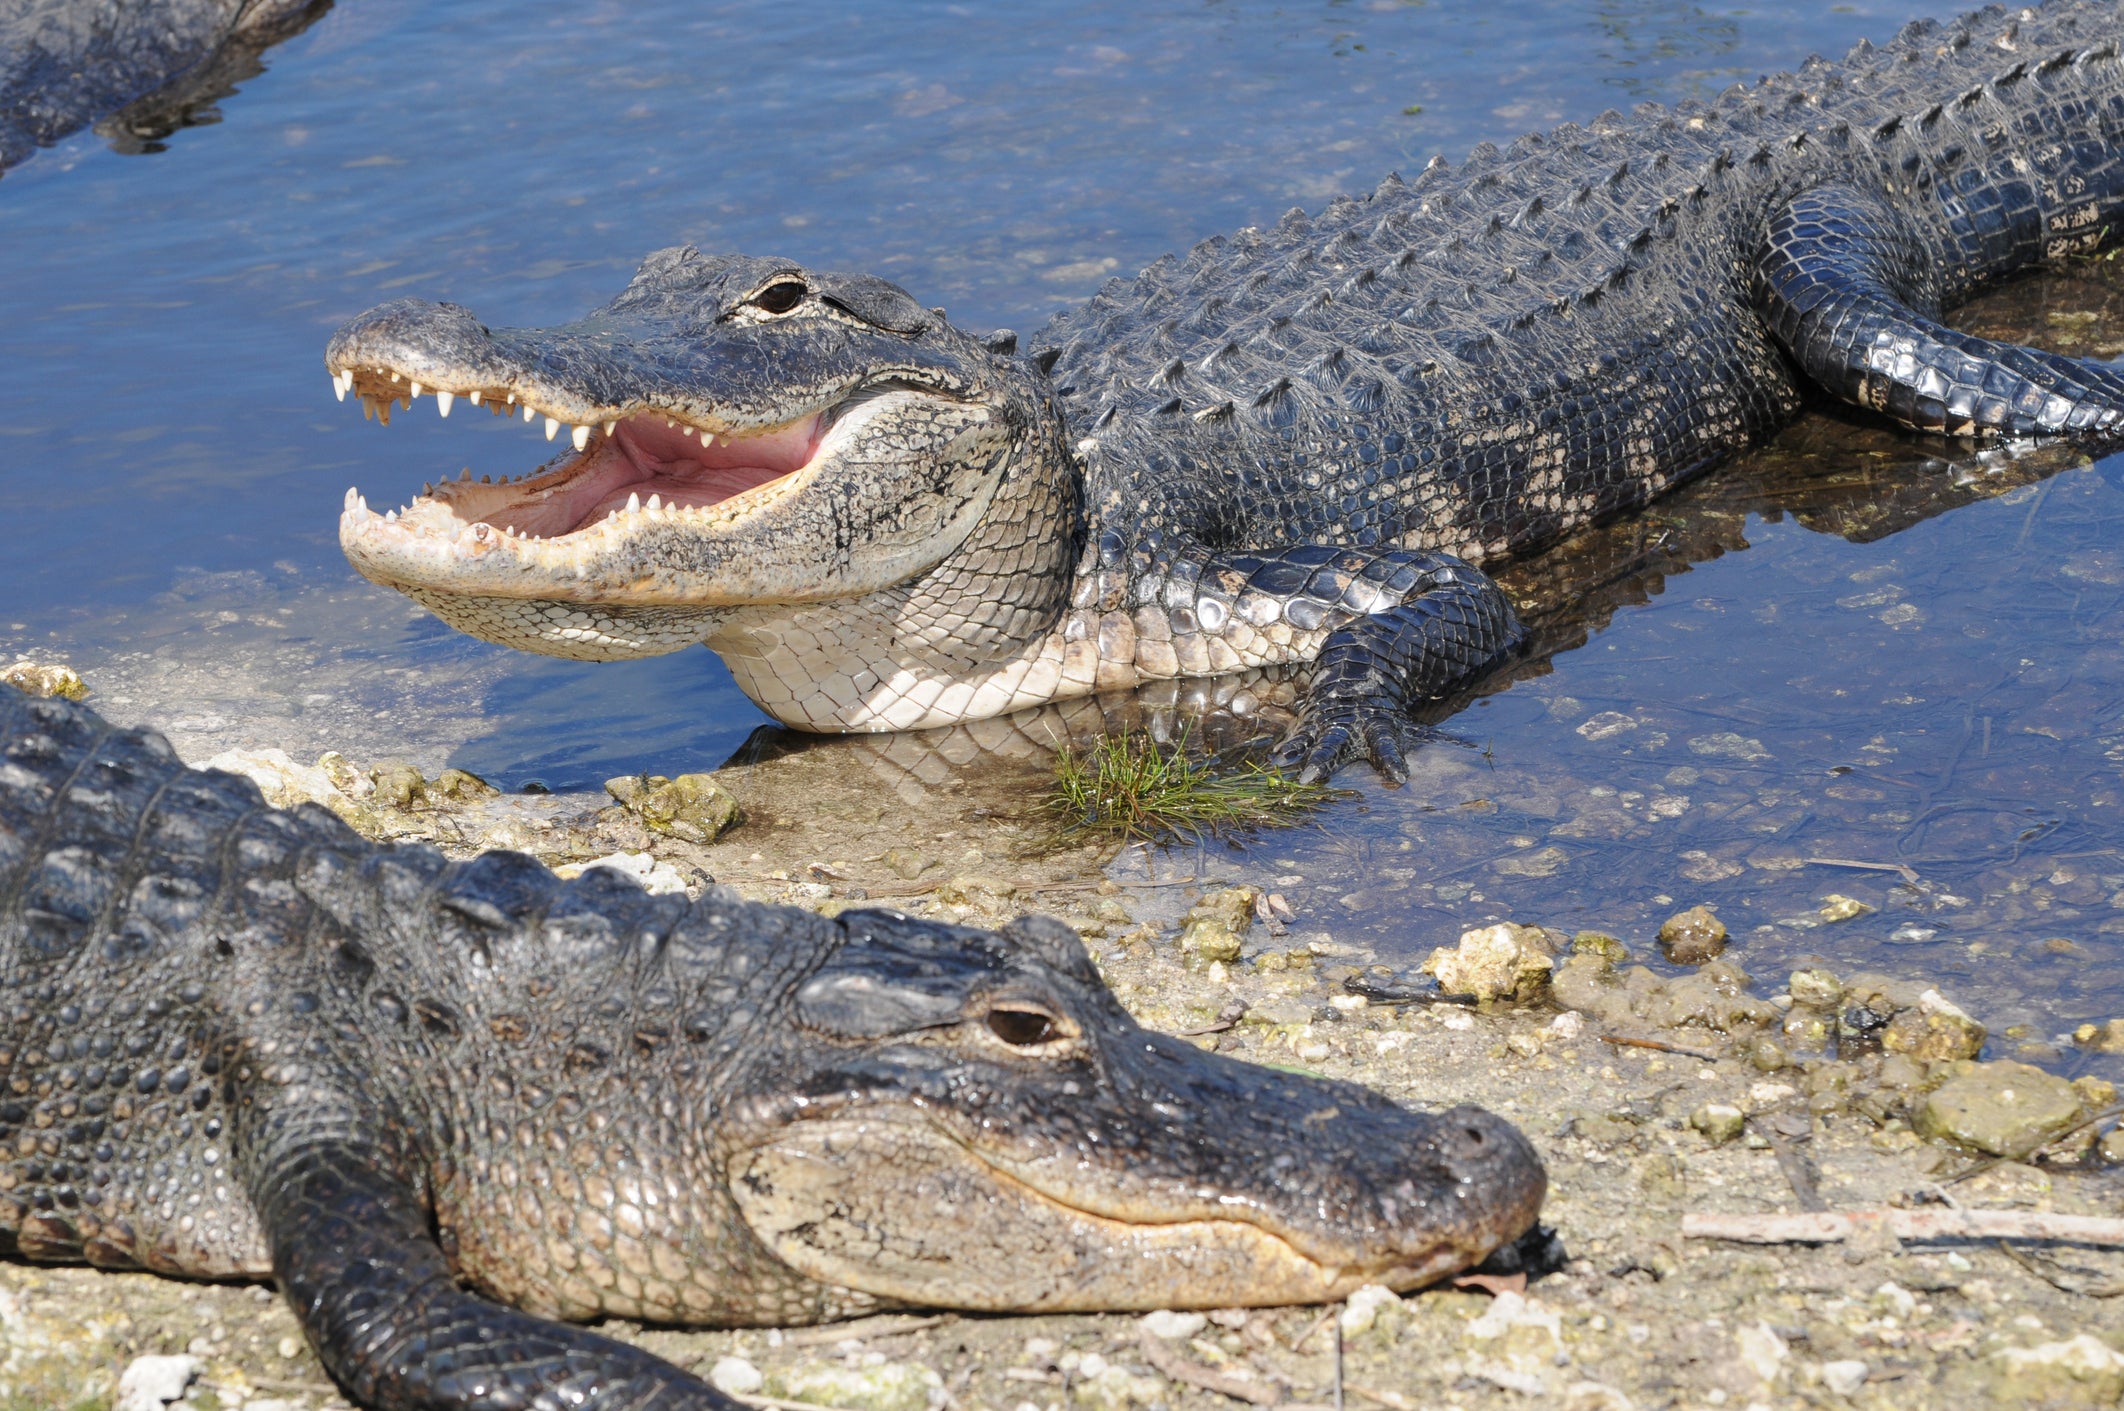 File picture of two American alligators